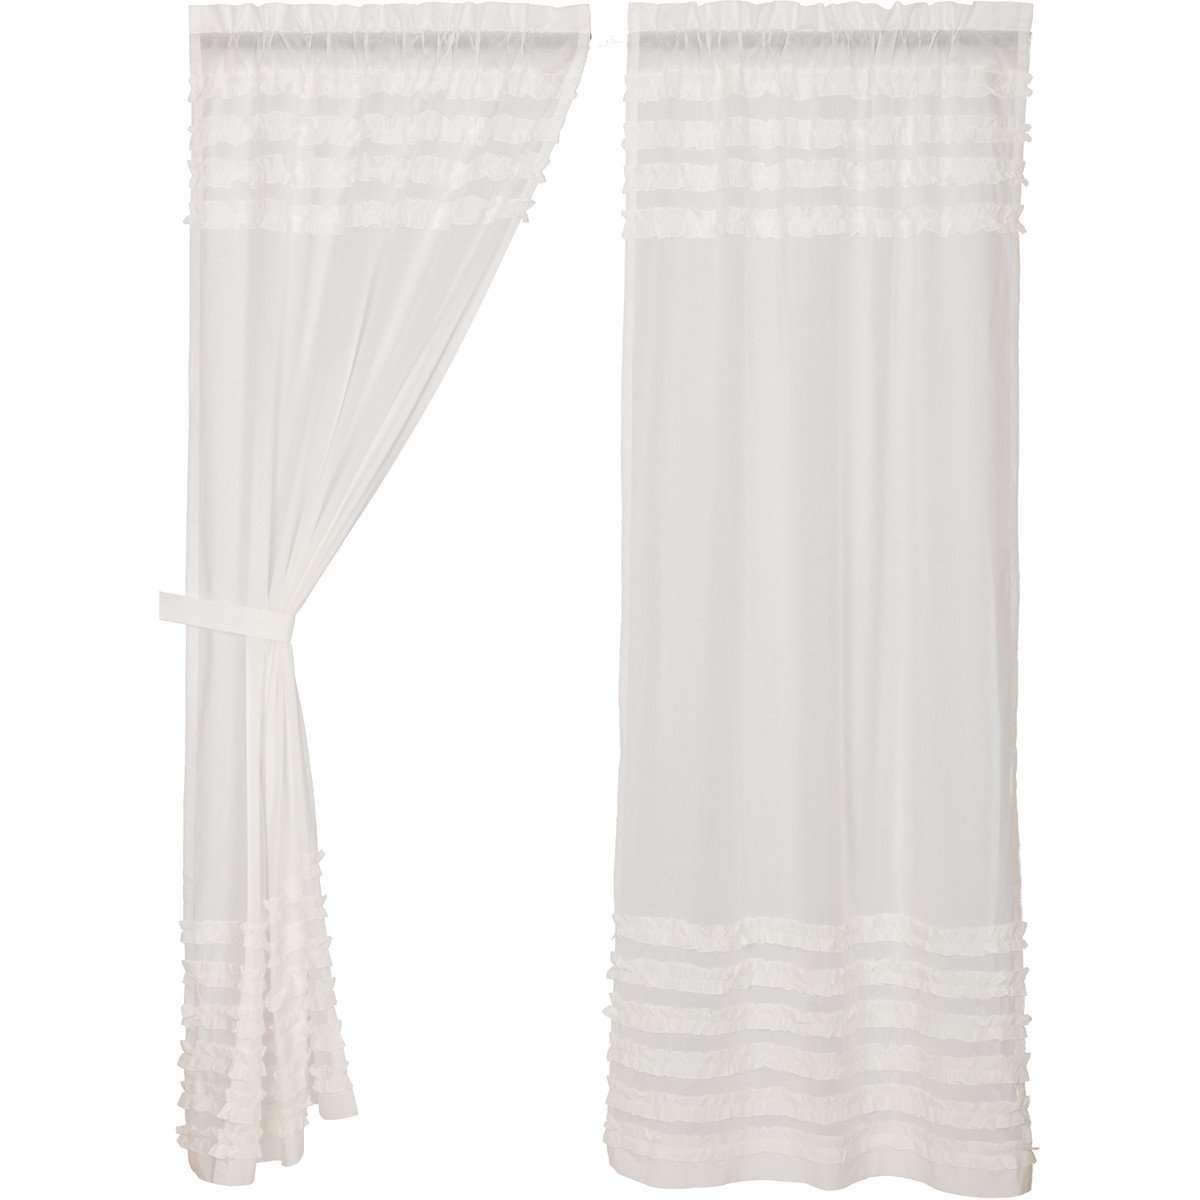 White Ruffled Sheer Petticoat Panel Curtain Set of 2 84x40 VHC Brands - The Fox Decor